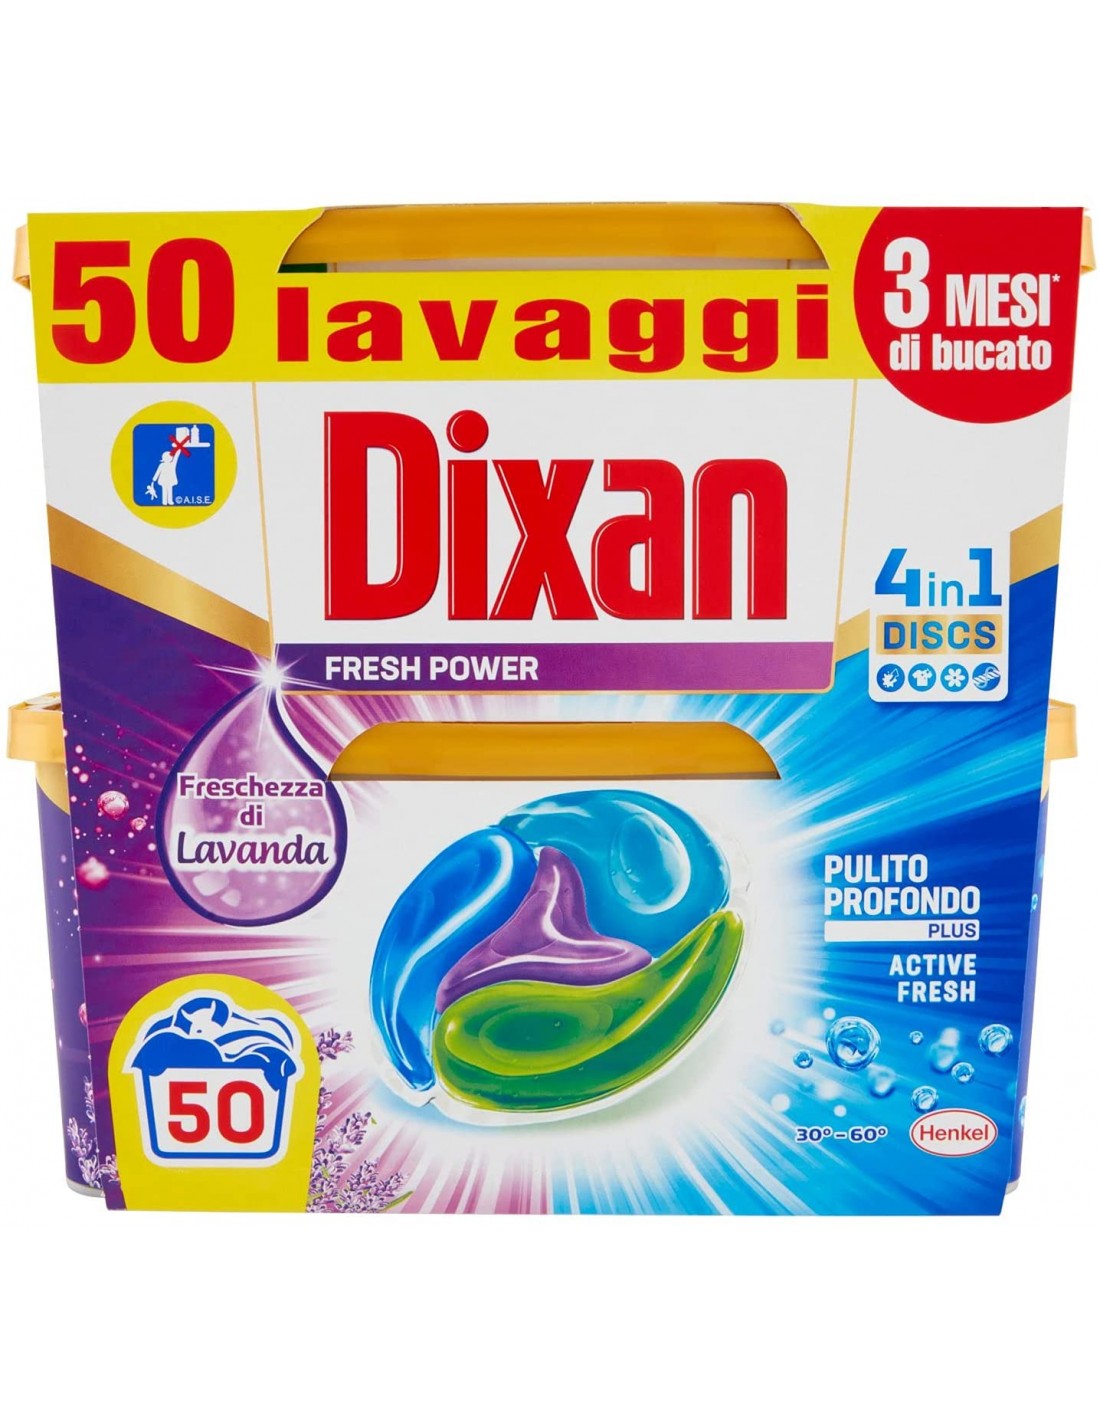 Dixan Offerta Promo Dixan Discs 4 in 1 Active Fresh Lavanda - 50 Lavaggi